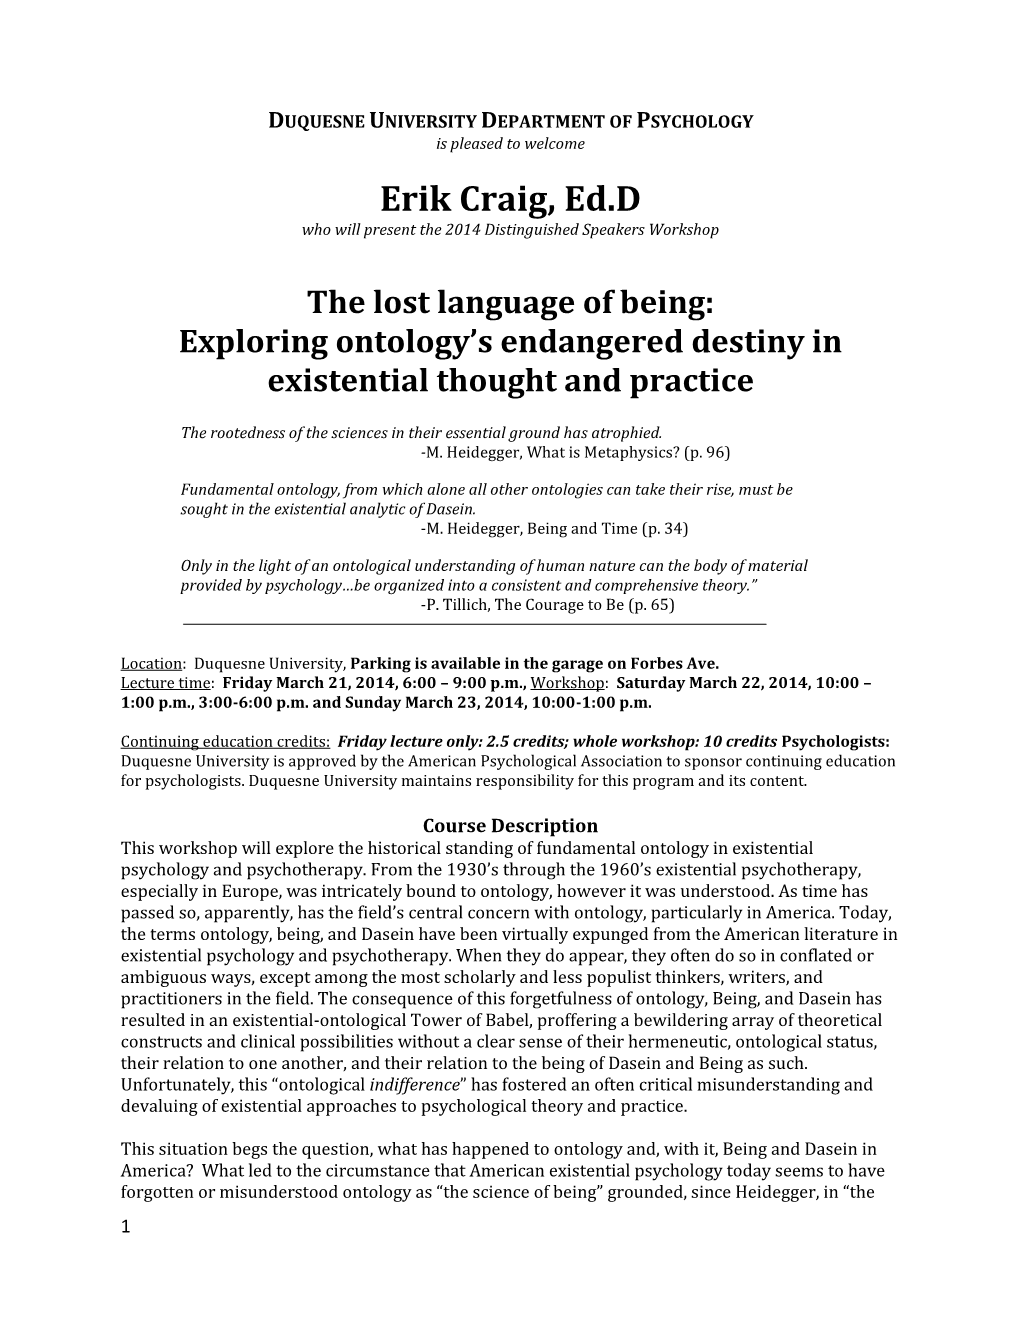 Erik Craig, Ed.D Who Will Present the 2014 Distinguished Speakers Workshop